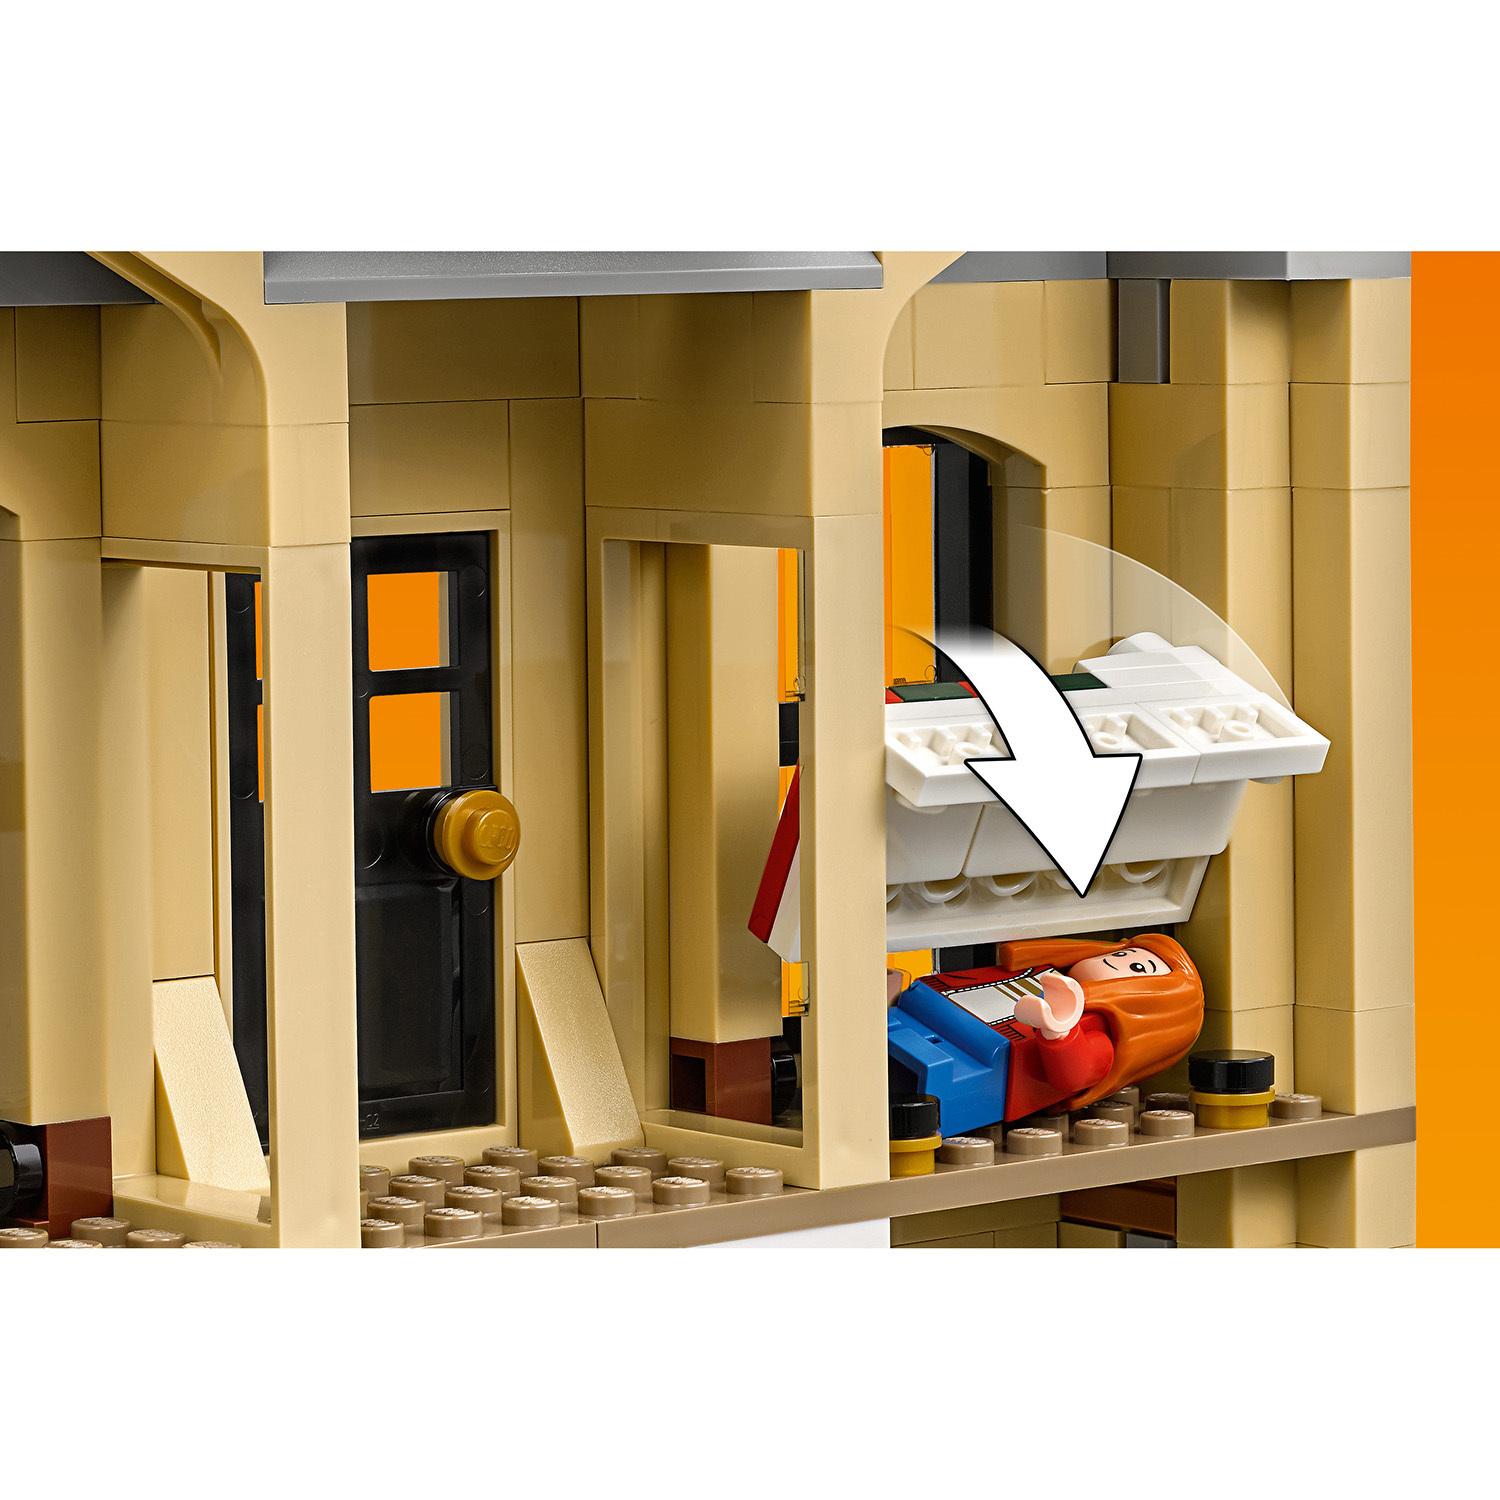 Lego Jurassic World 75930 Нападение индораптора в поместье